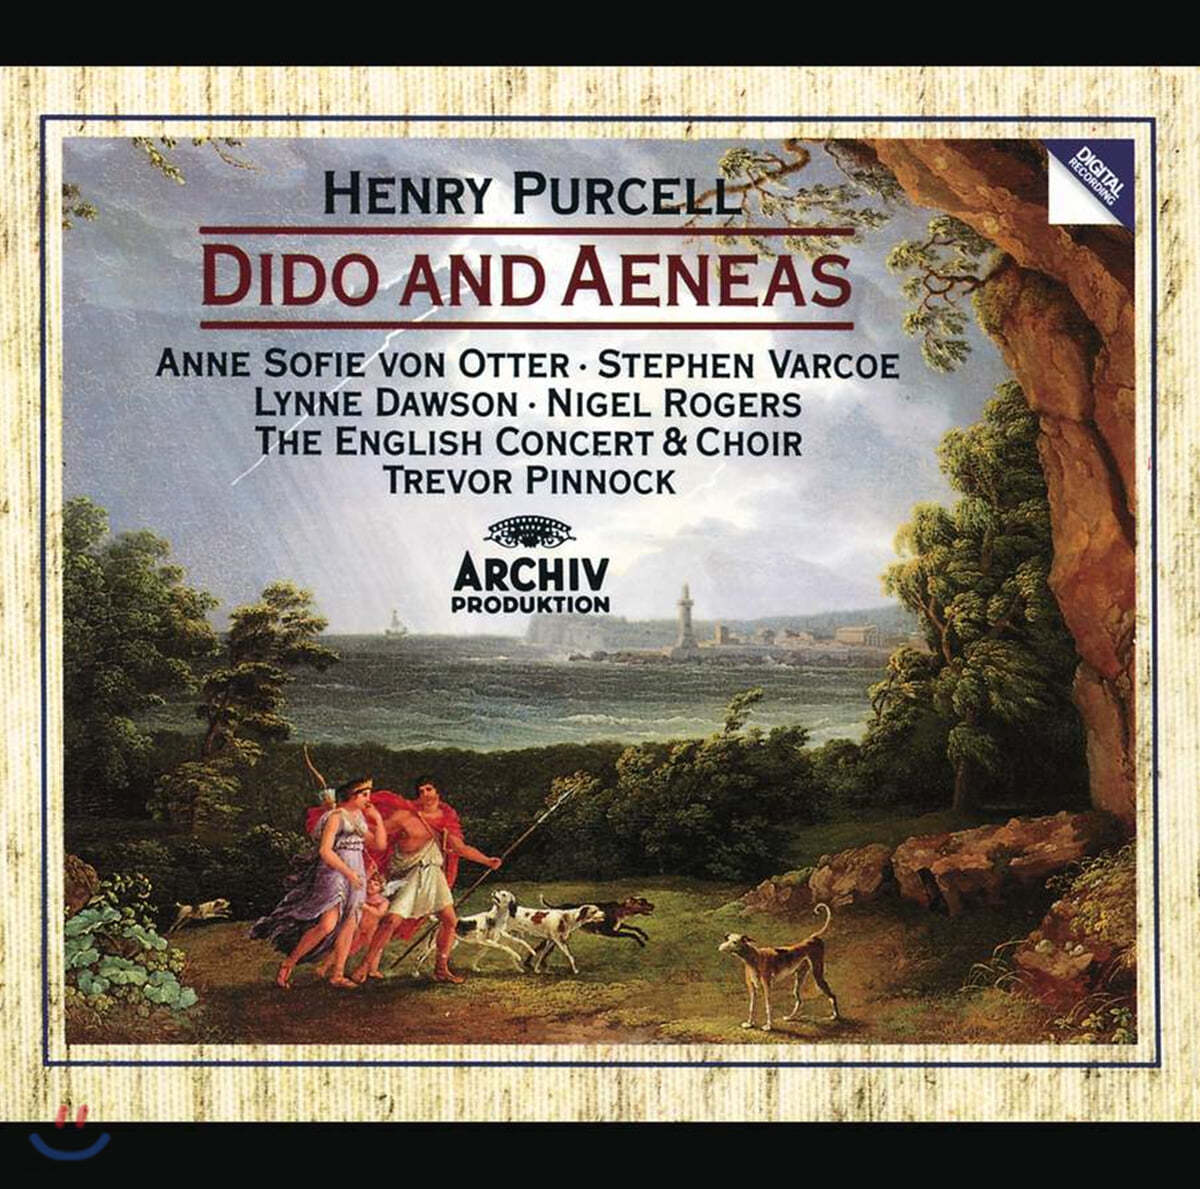 Anne Sofie von Otter 퍼셀: 디도와 아에네스 (Purcell: Dido and Aeneas)